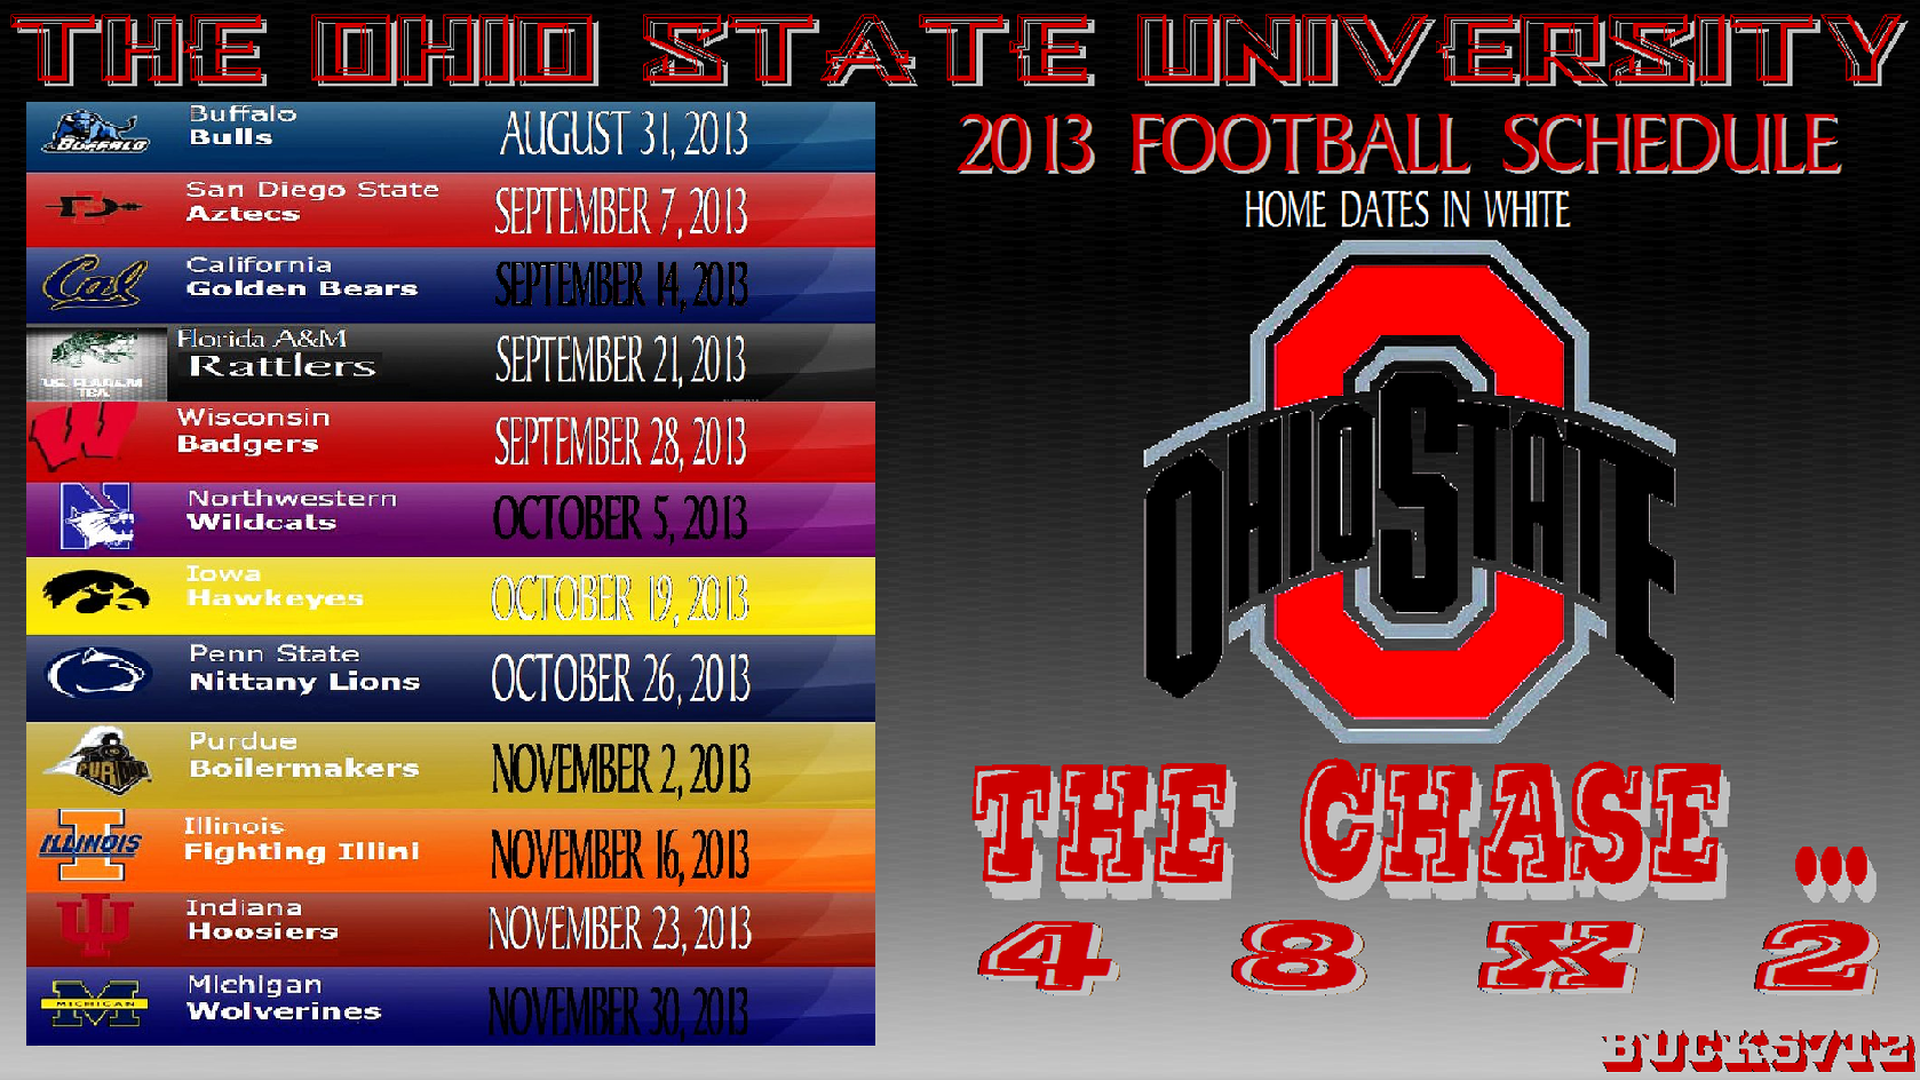 2013 OHIO STATE BUCKEYES FOOTBALL SCHEDULE - Ohio State Football Wallpaper (33883702) - Fanpop